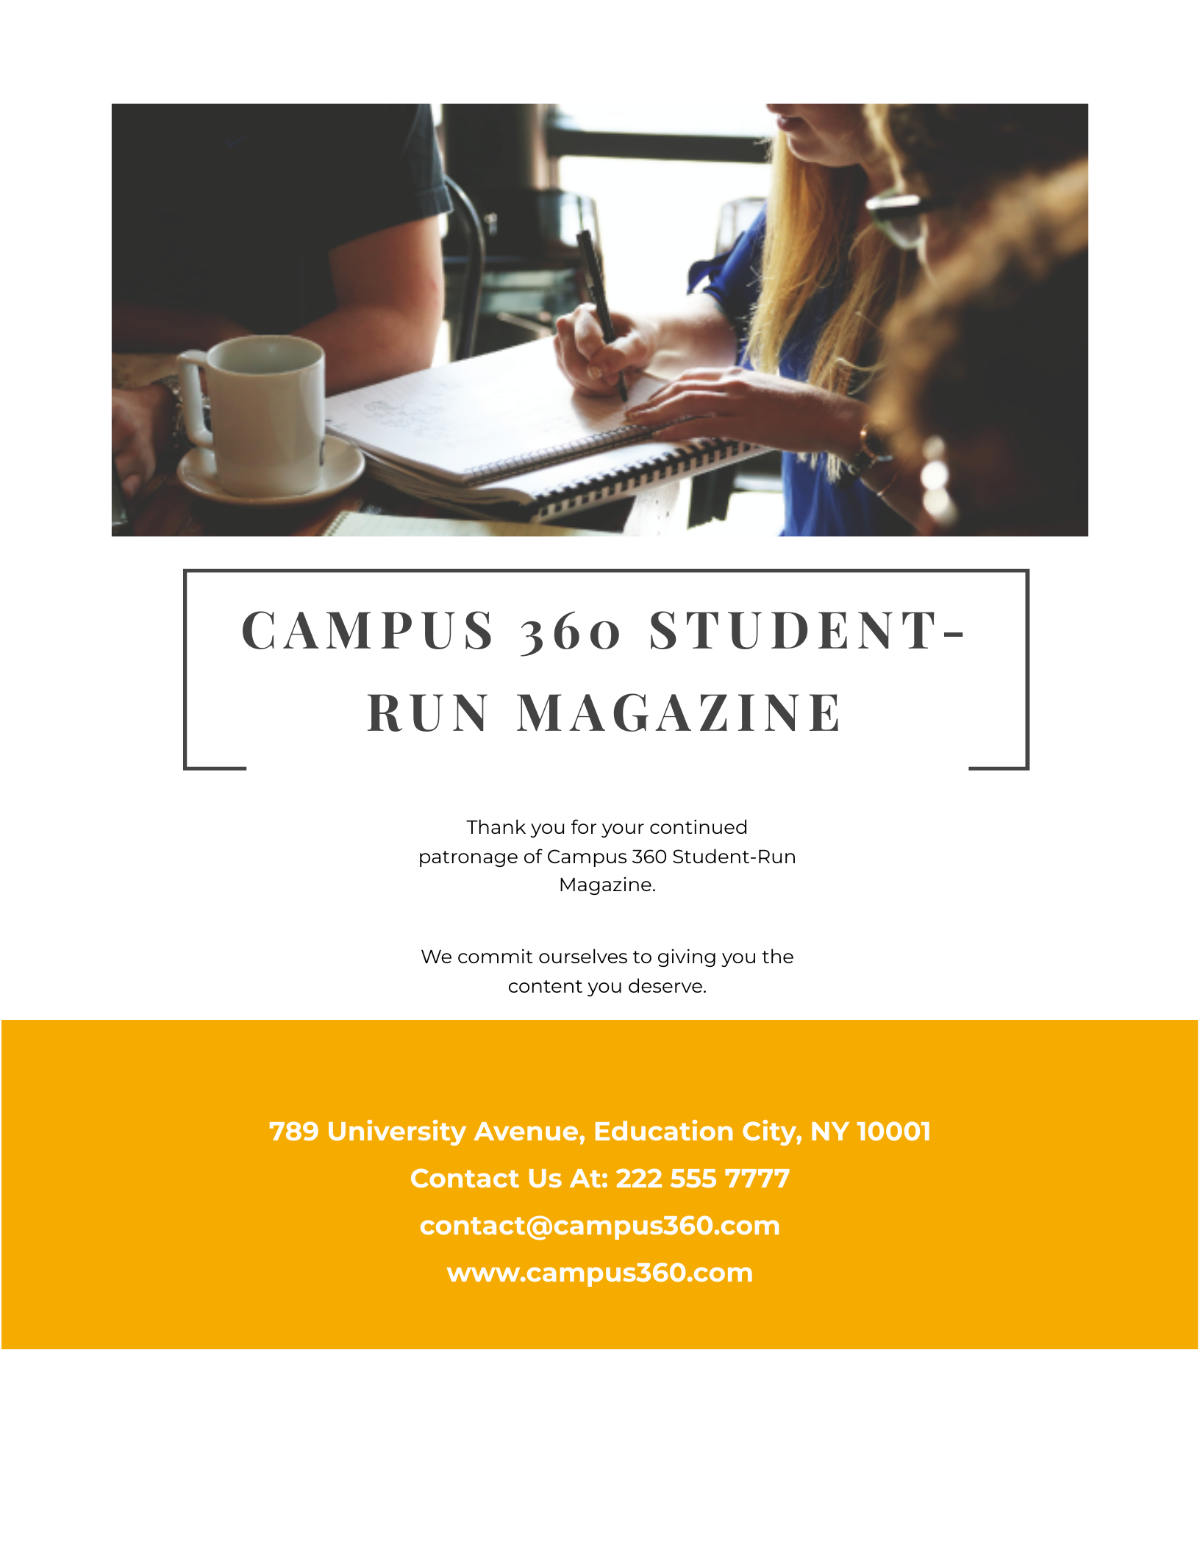 Student News Magazine